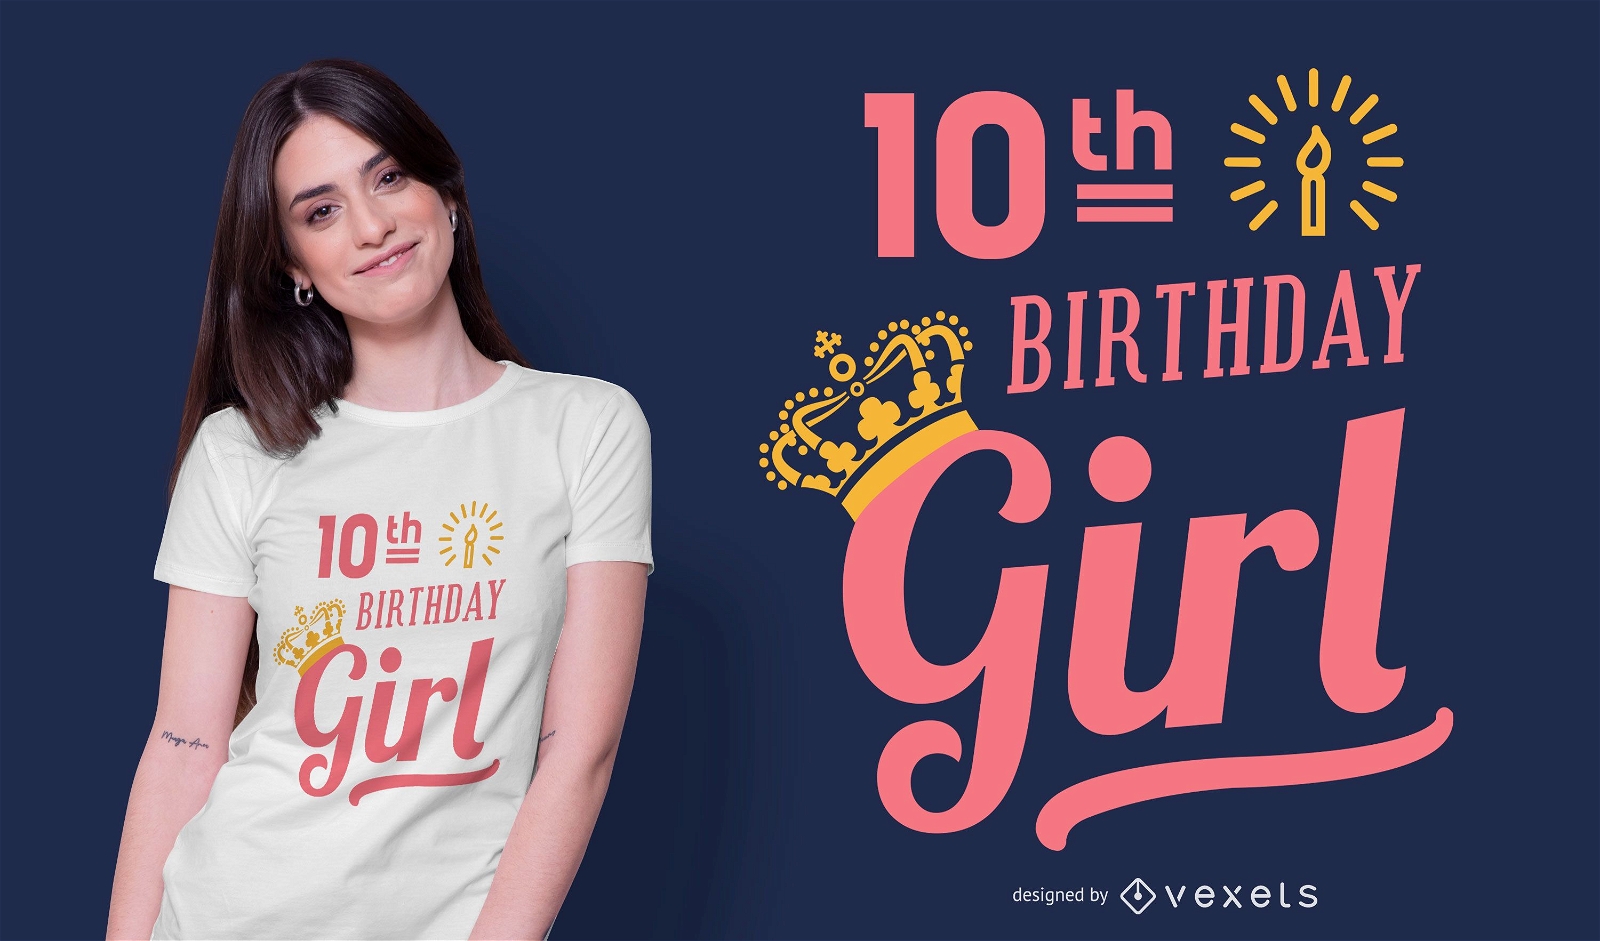 Birthday girl t-shirt design